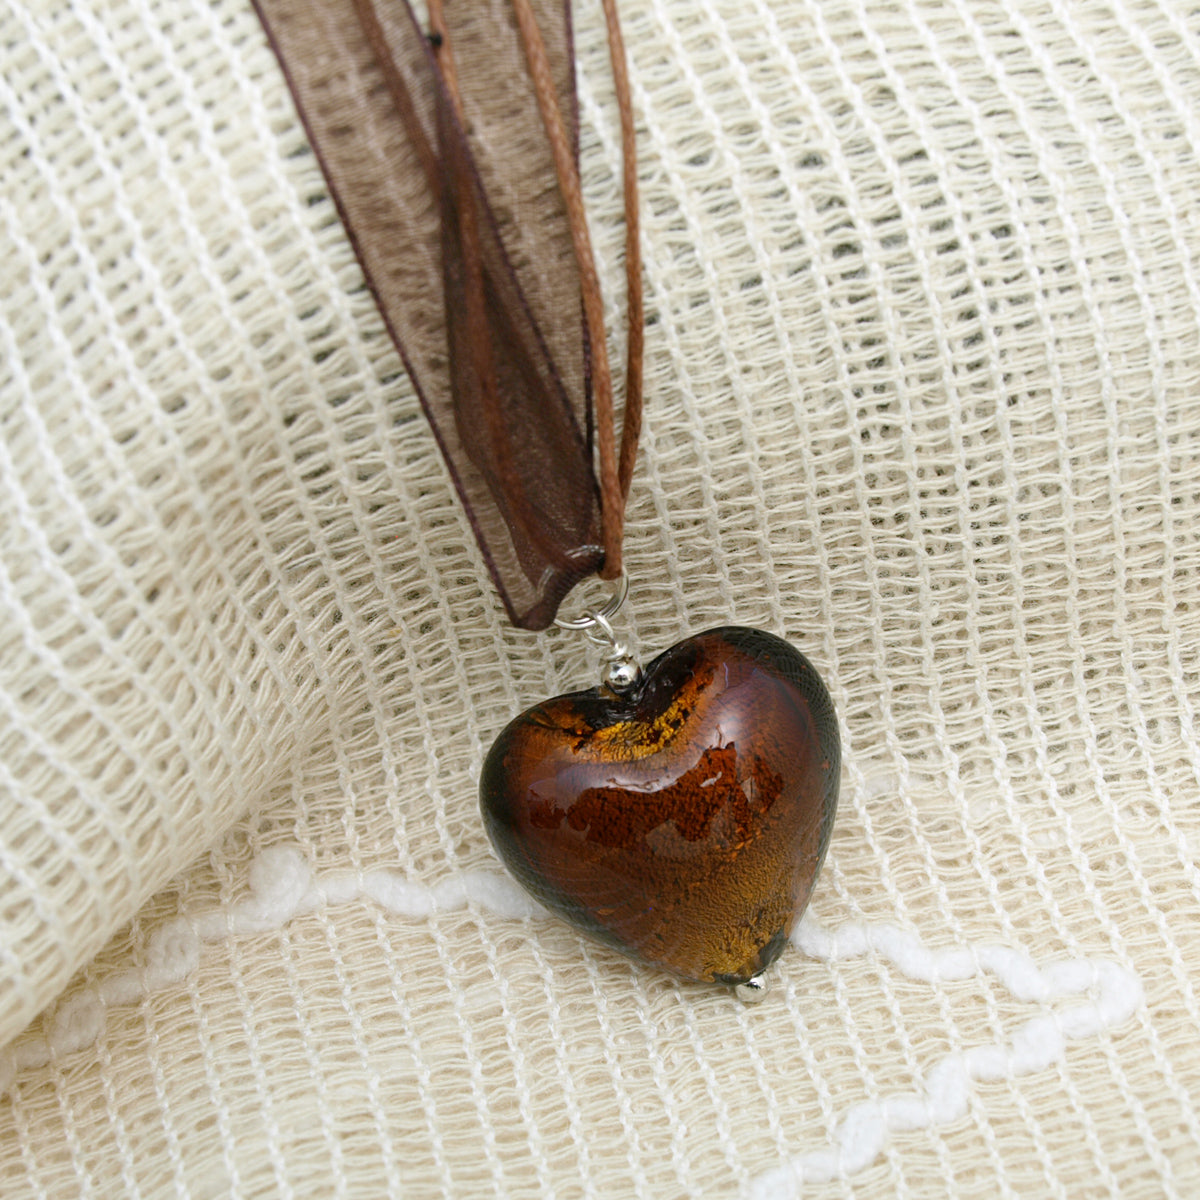 Glazed Heart Pendant Ribbon Necklace